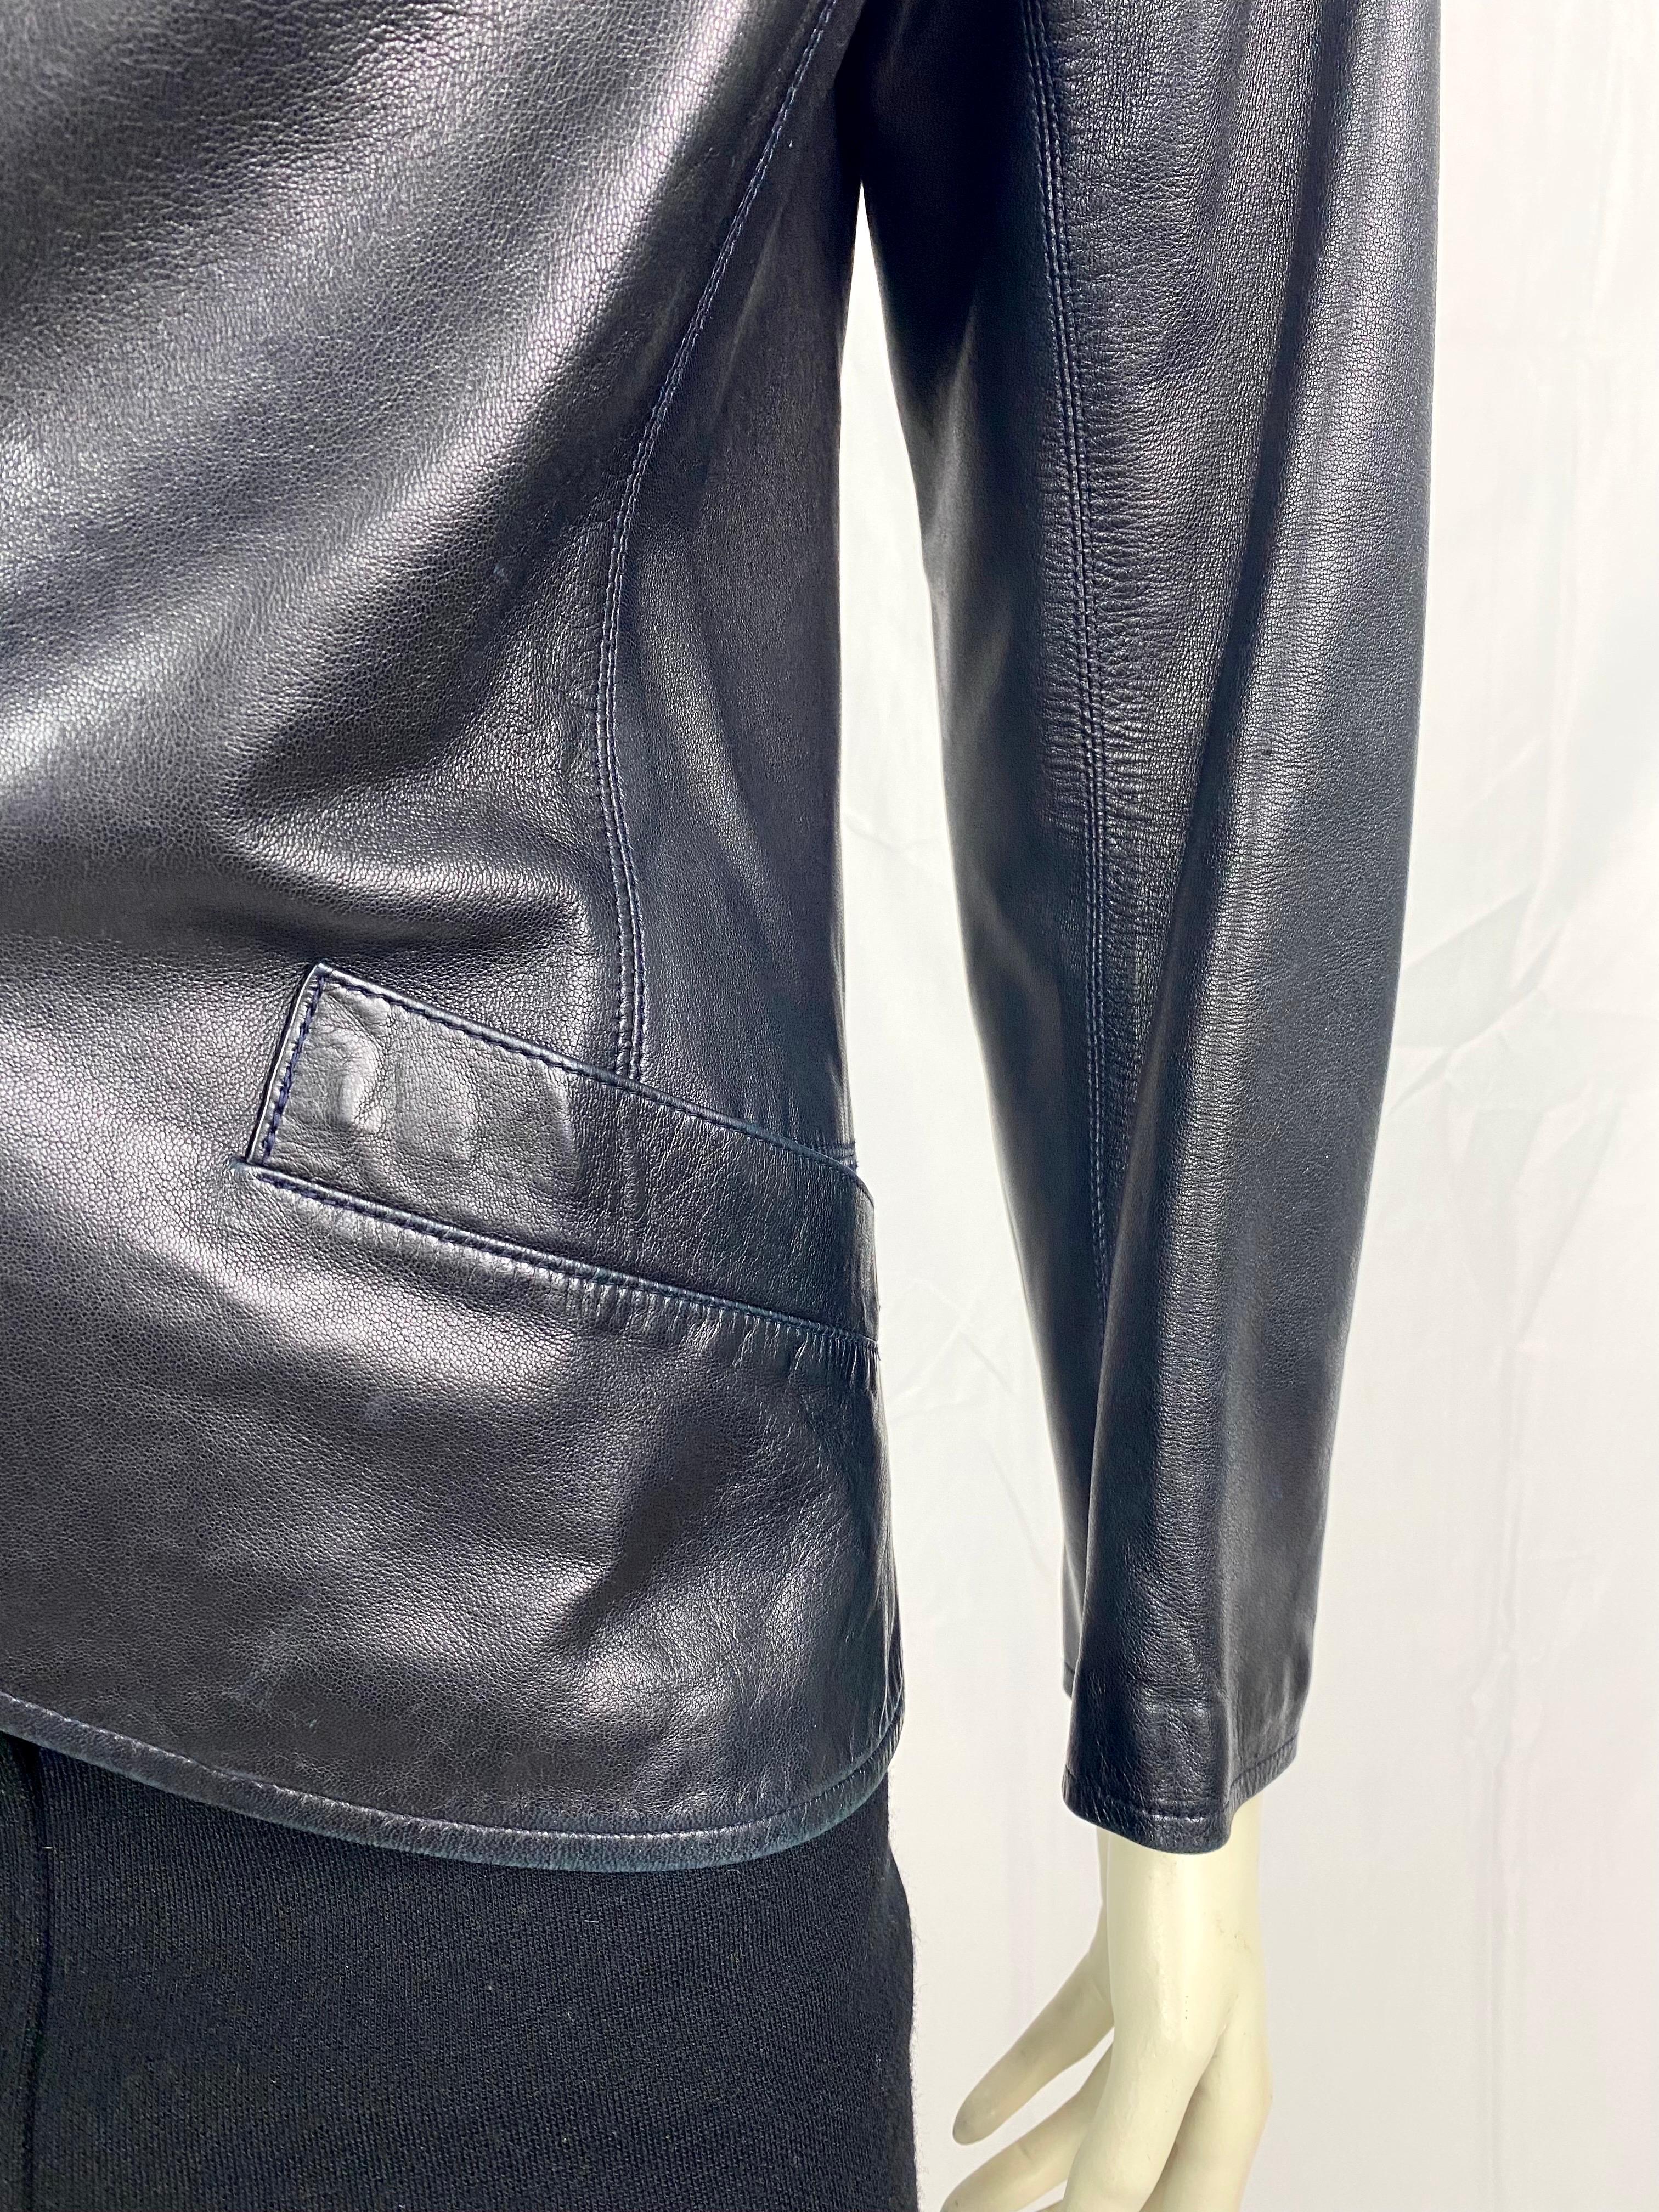 Women's or Men's Vintage Yves saint laurent rive gauche lambskin leather blazer from 1970